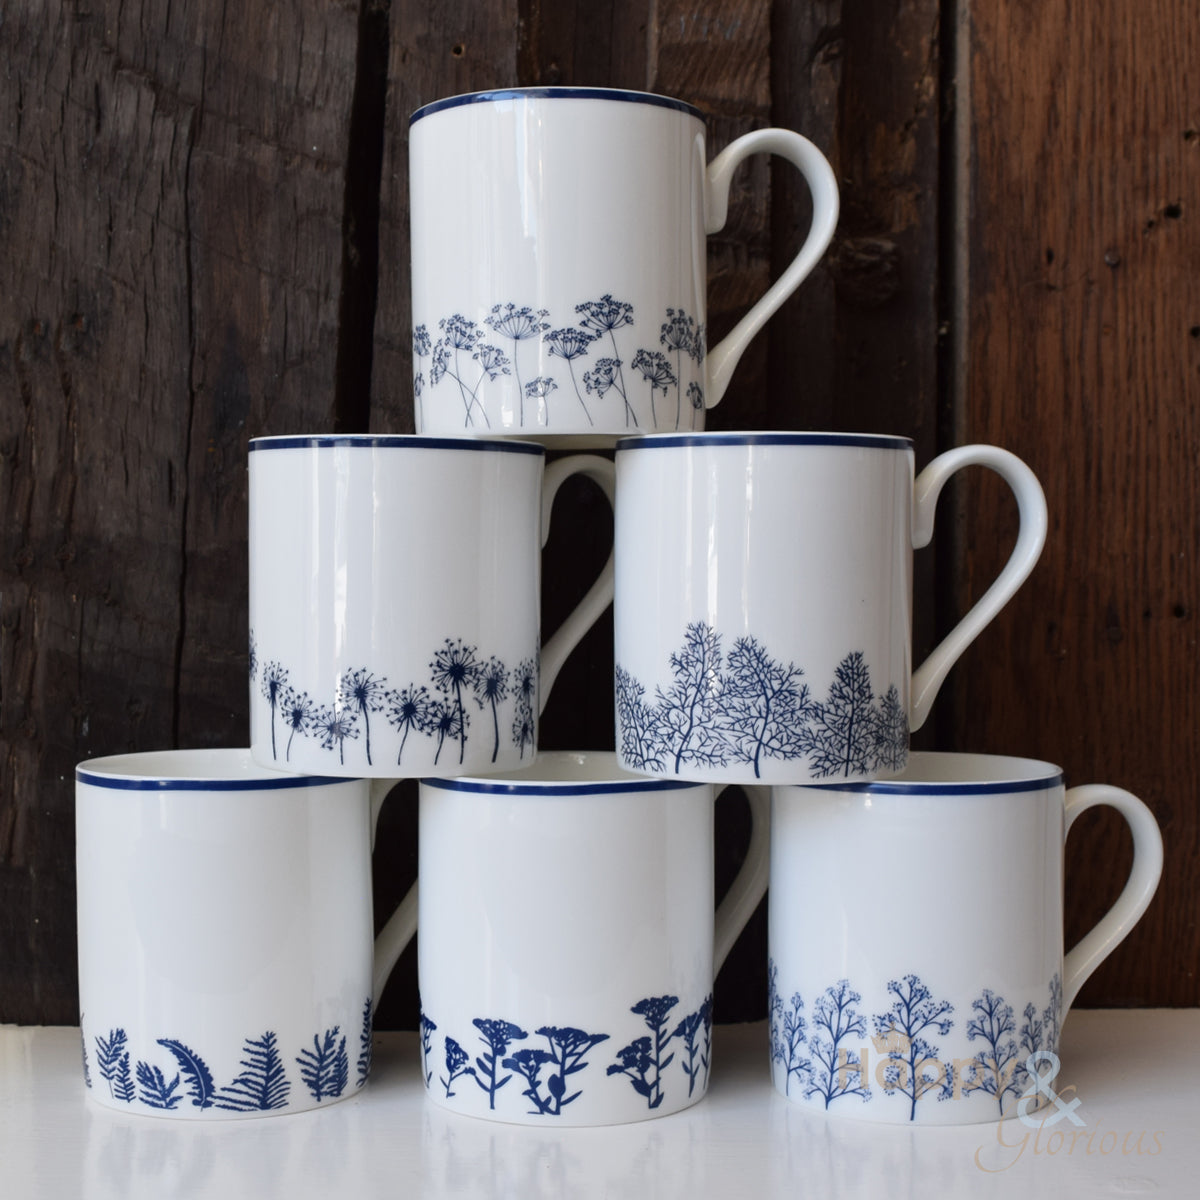 Navy blue & white cow parsley silhouette fine china mug by Kate Tompsett